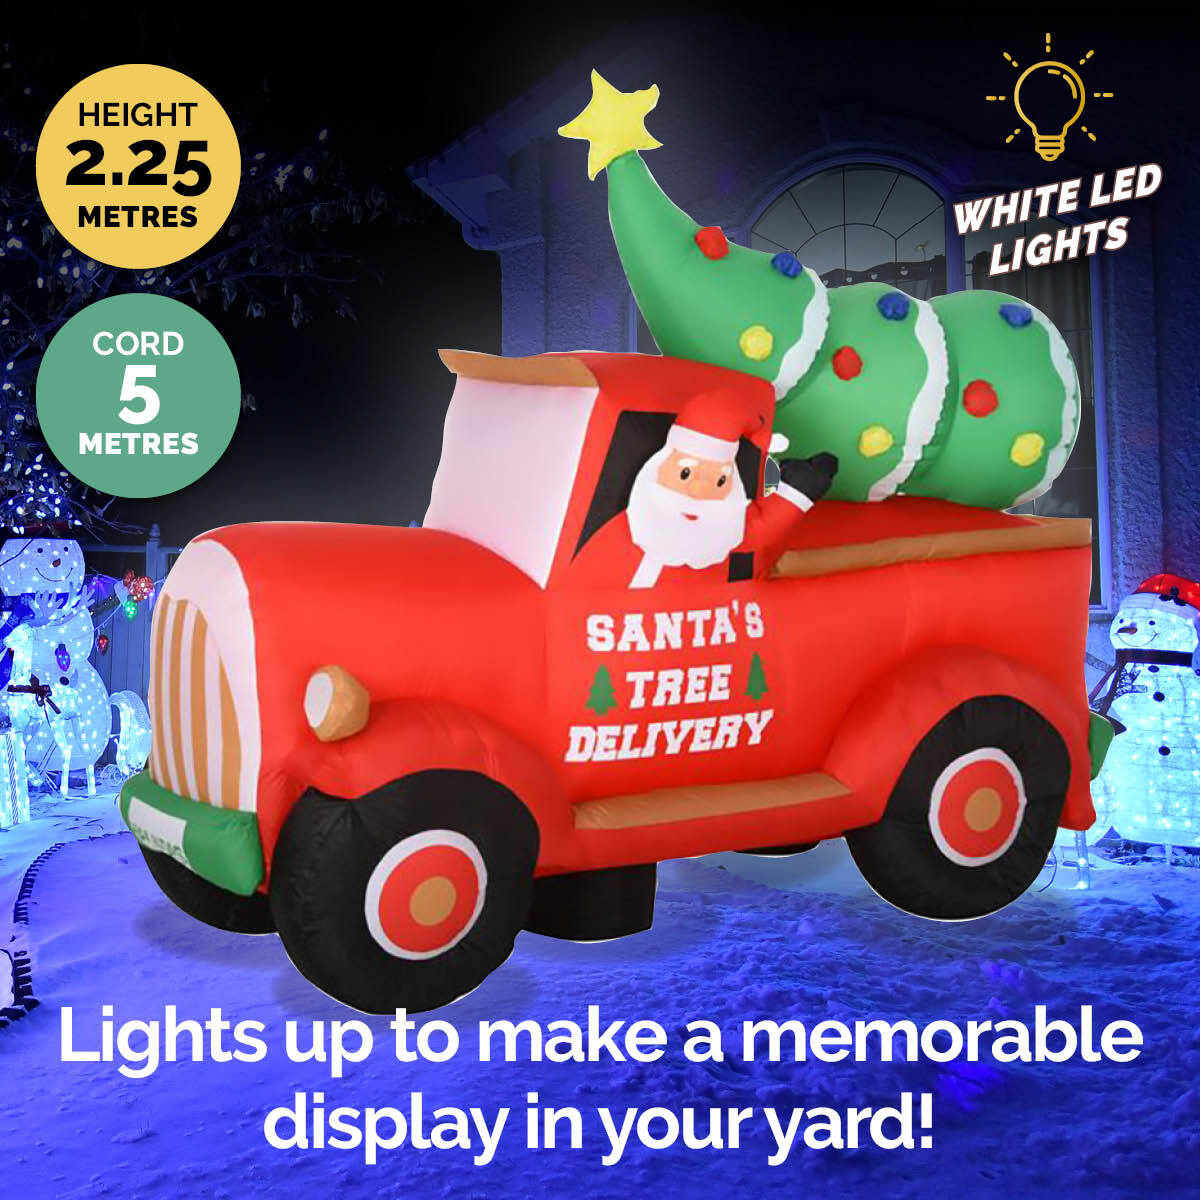 Christmas By Sas 2.25m Santa Ute & Tree Built-In Blower Bright LED Lighting Deals499